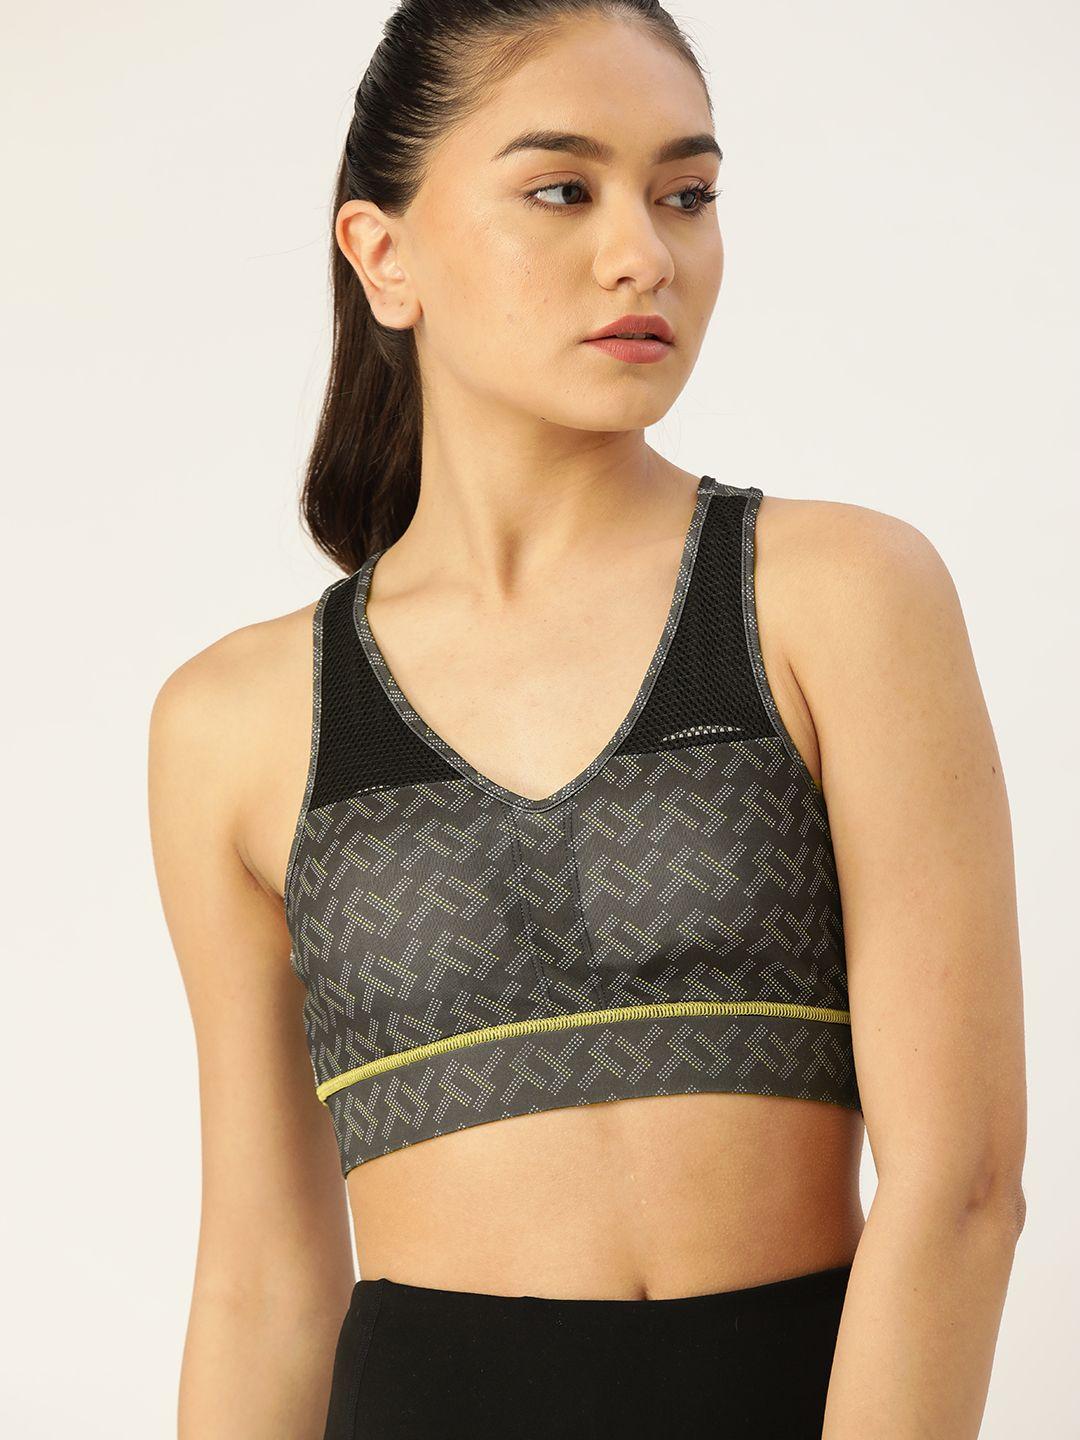 dressberry black & grey geometric print workout bra lightly padded